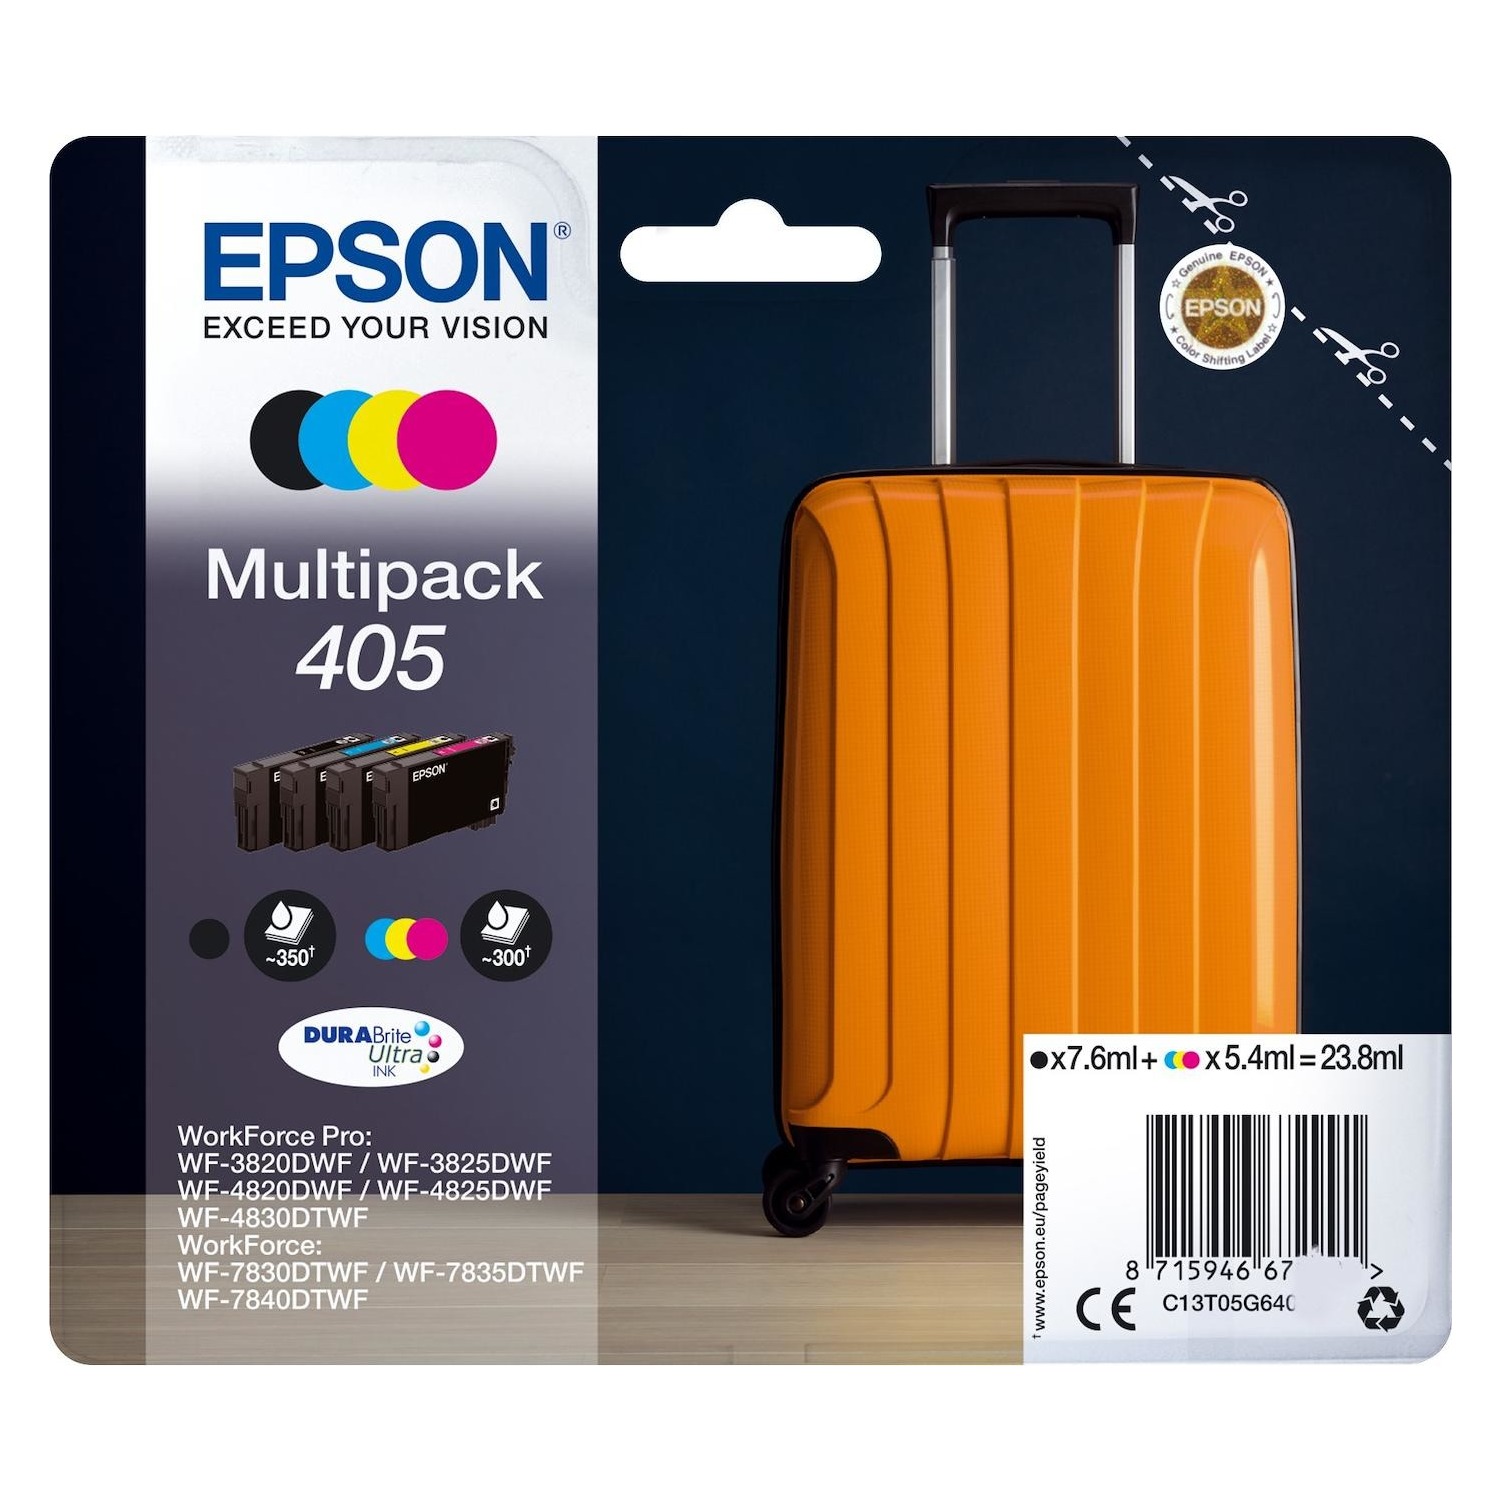 Immagine per Cartuccia Epson multipack 405 valigia             per SWF-3825DWF  WF-7835DTWF da DIMOStore